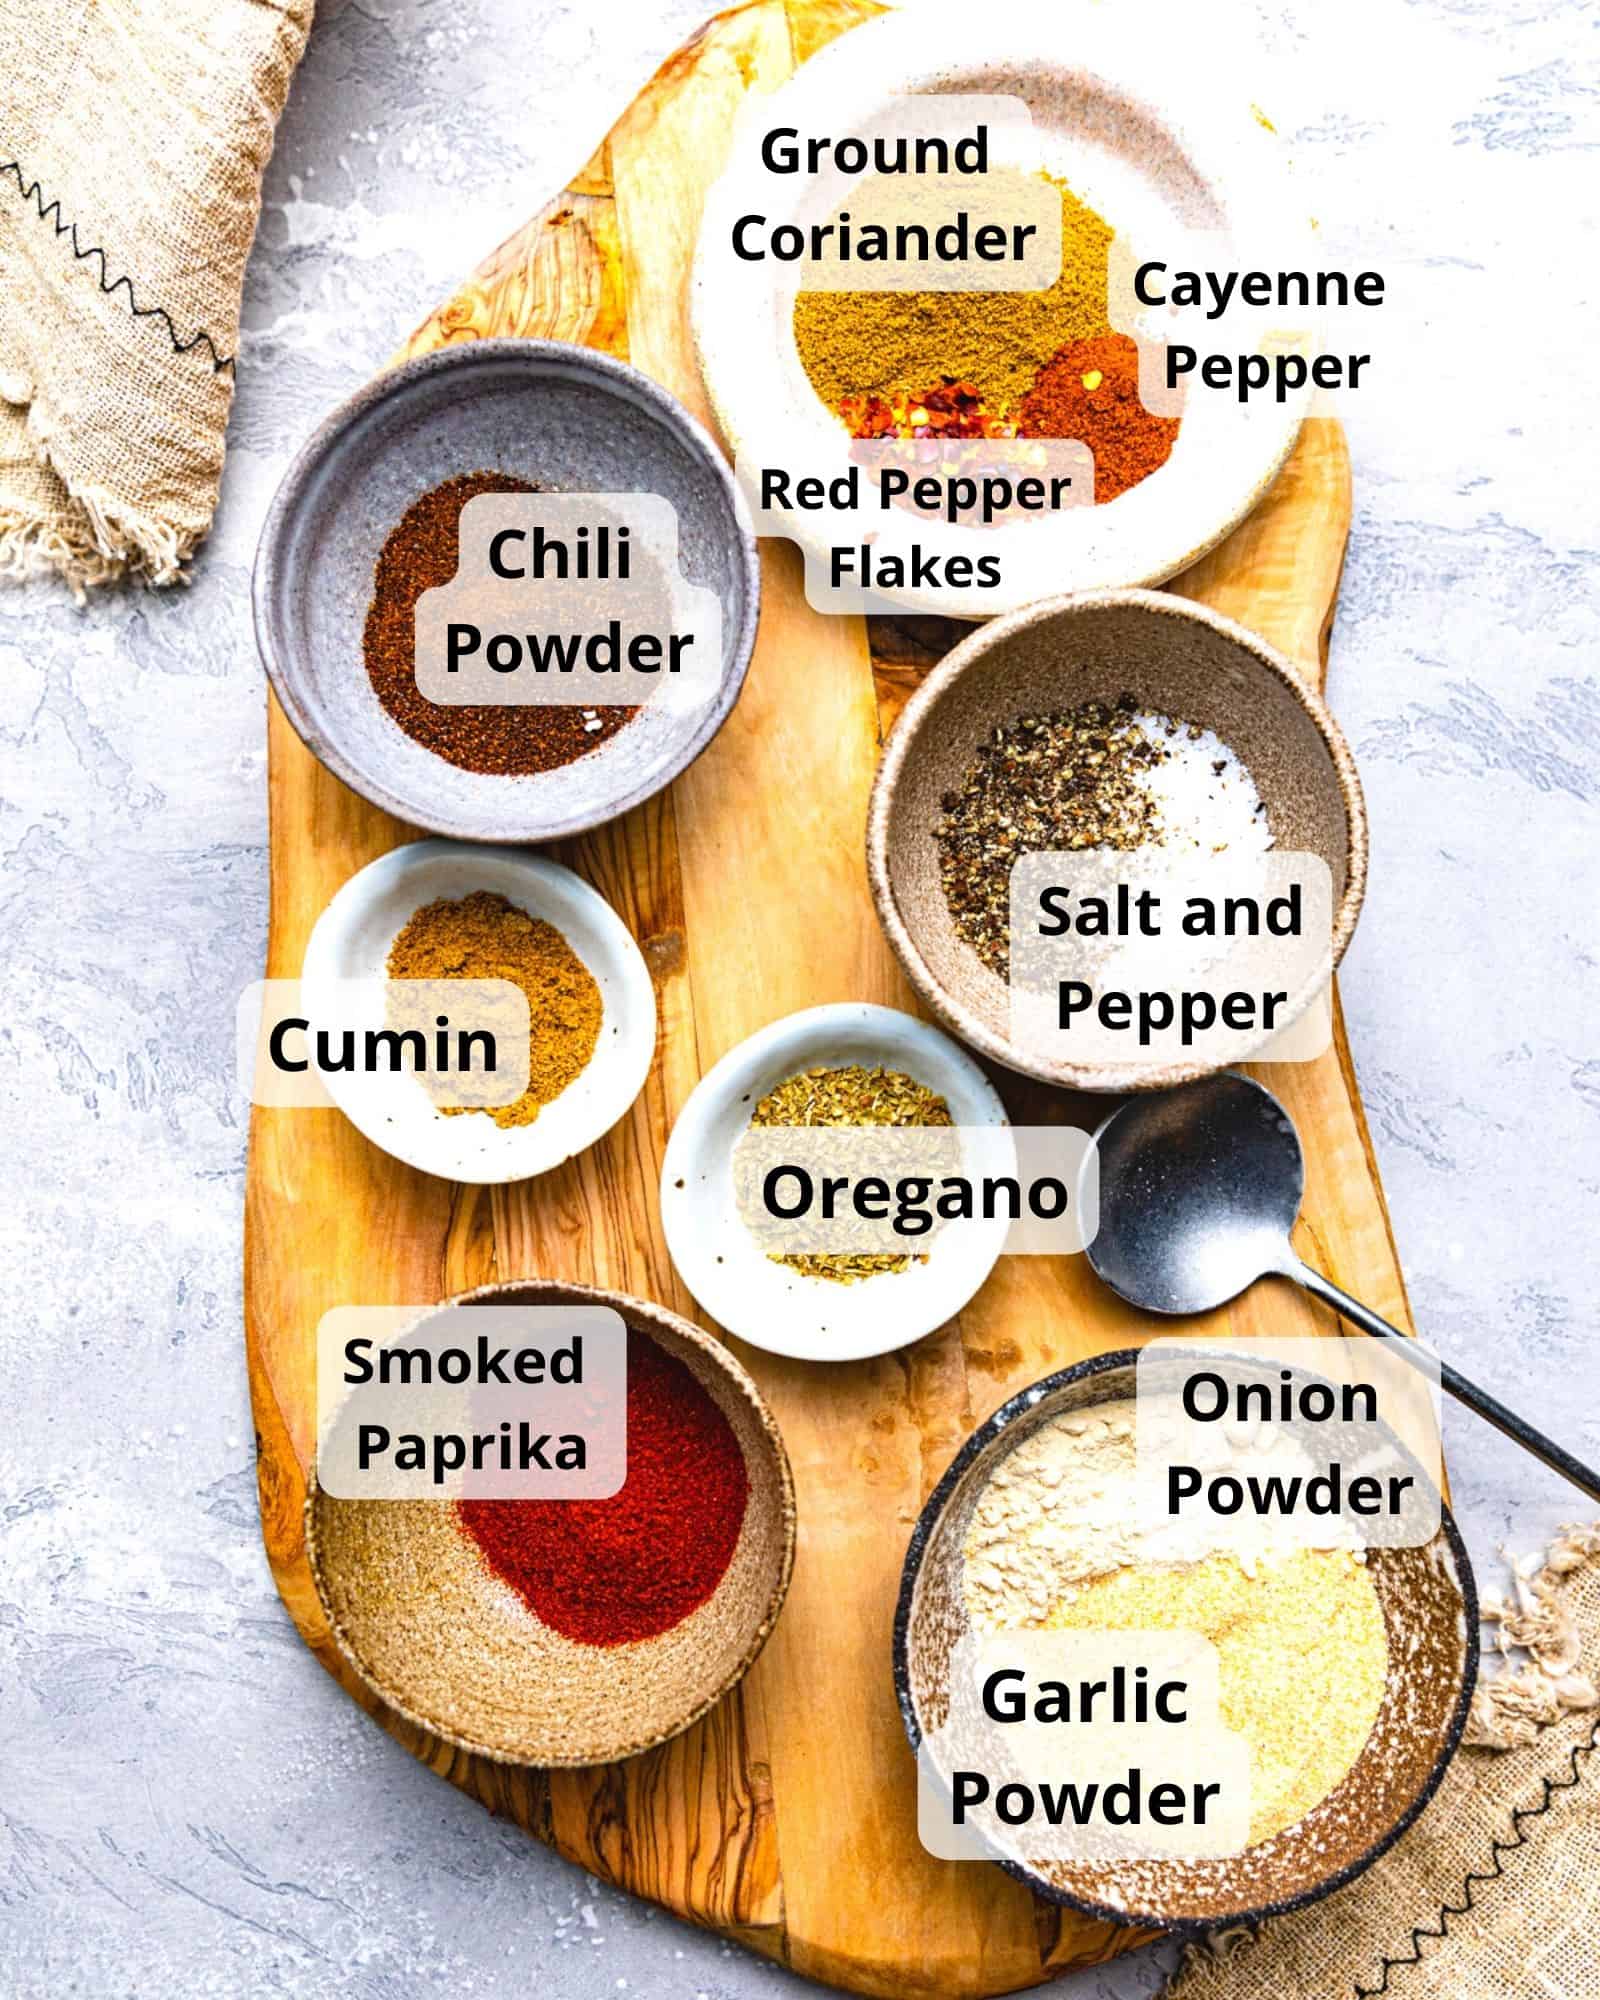 ingredients to make chicken taco seasoning - ground coriander, red pepper flakes, cayenne pepper, smoked paprika, oregano, chili powder, salt, pepper, garlic powder, and onion powder.